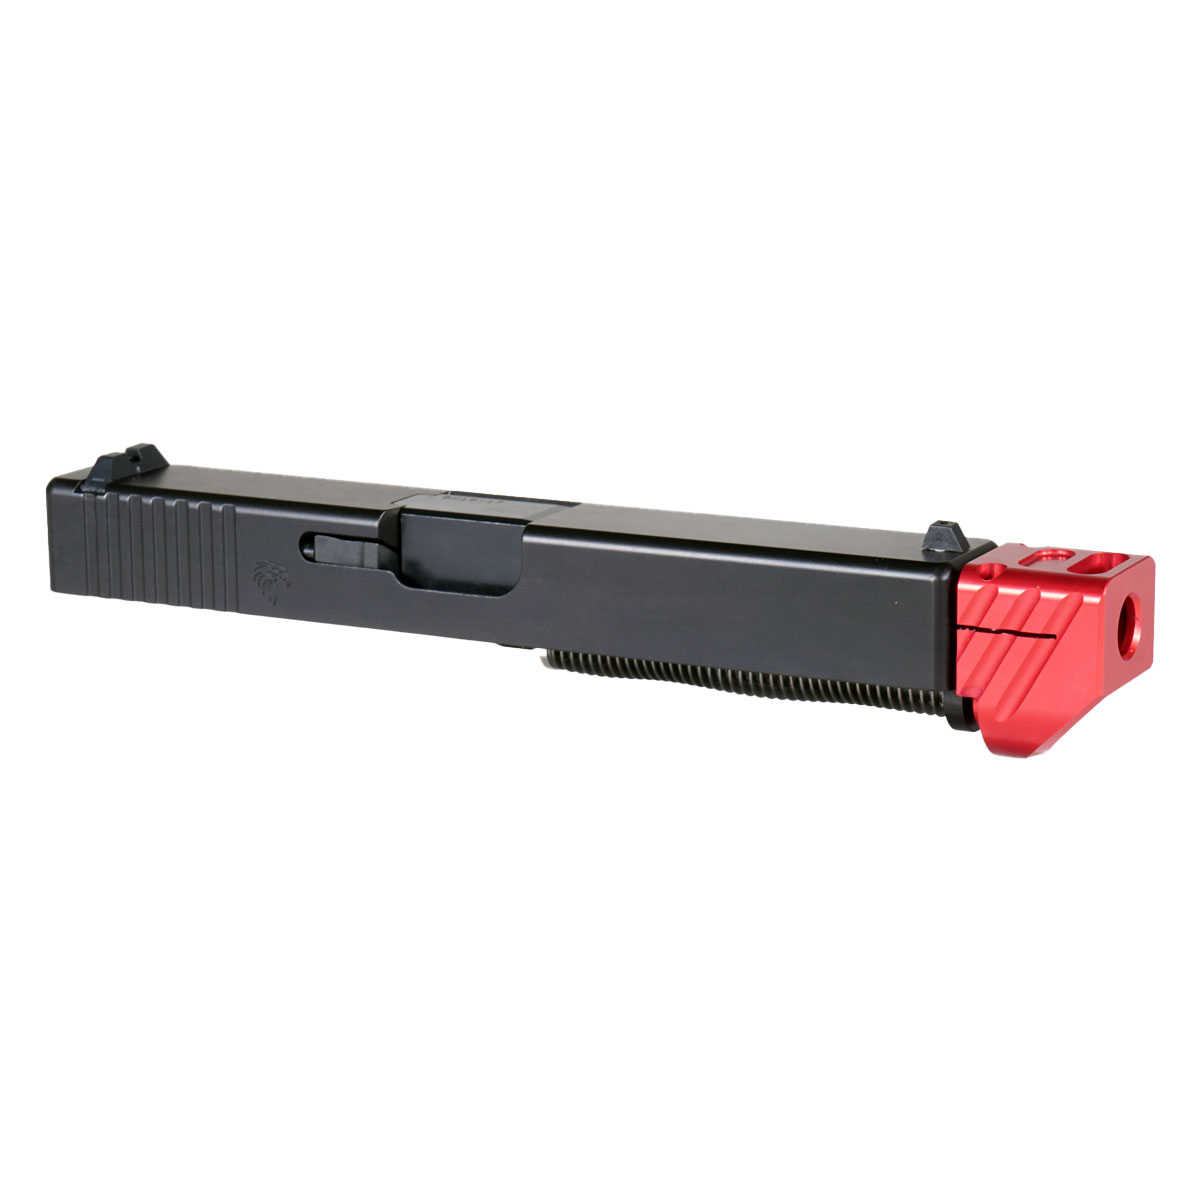 MMC 'Boomerango V3 w/ Red Compensator' 9mm Complete Slide Kit - Glock 17 Gen 1-3 Compatible